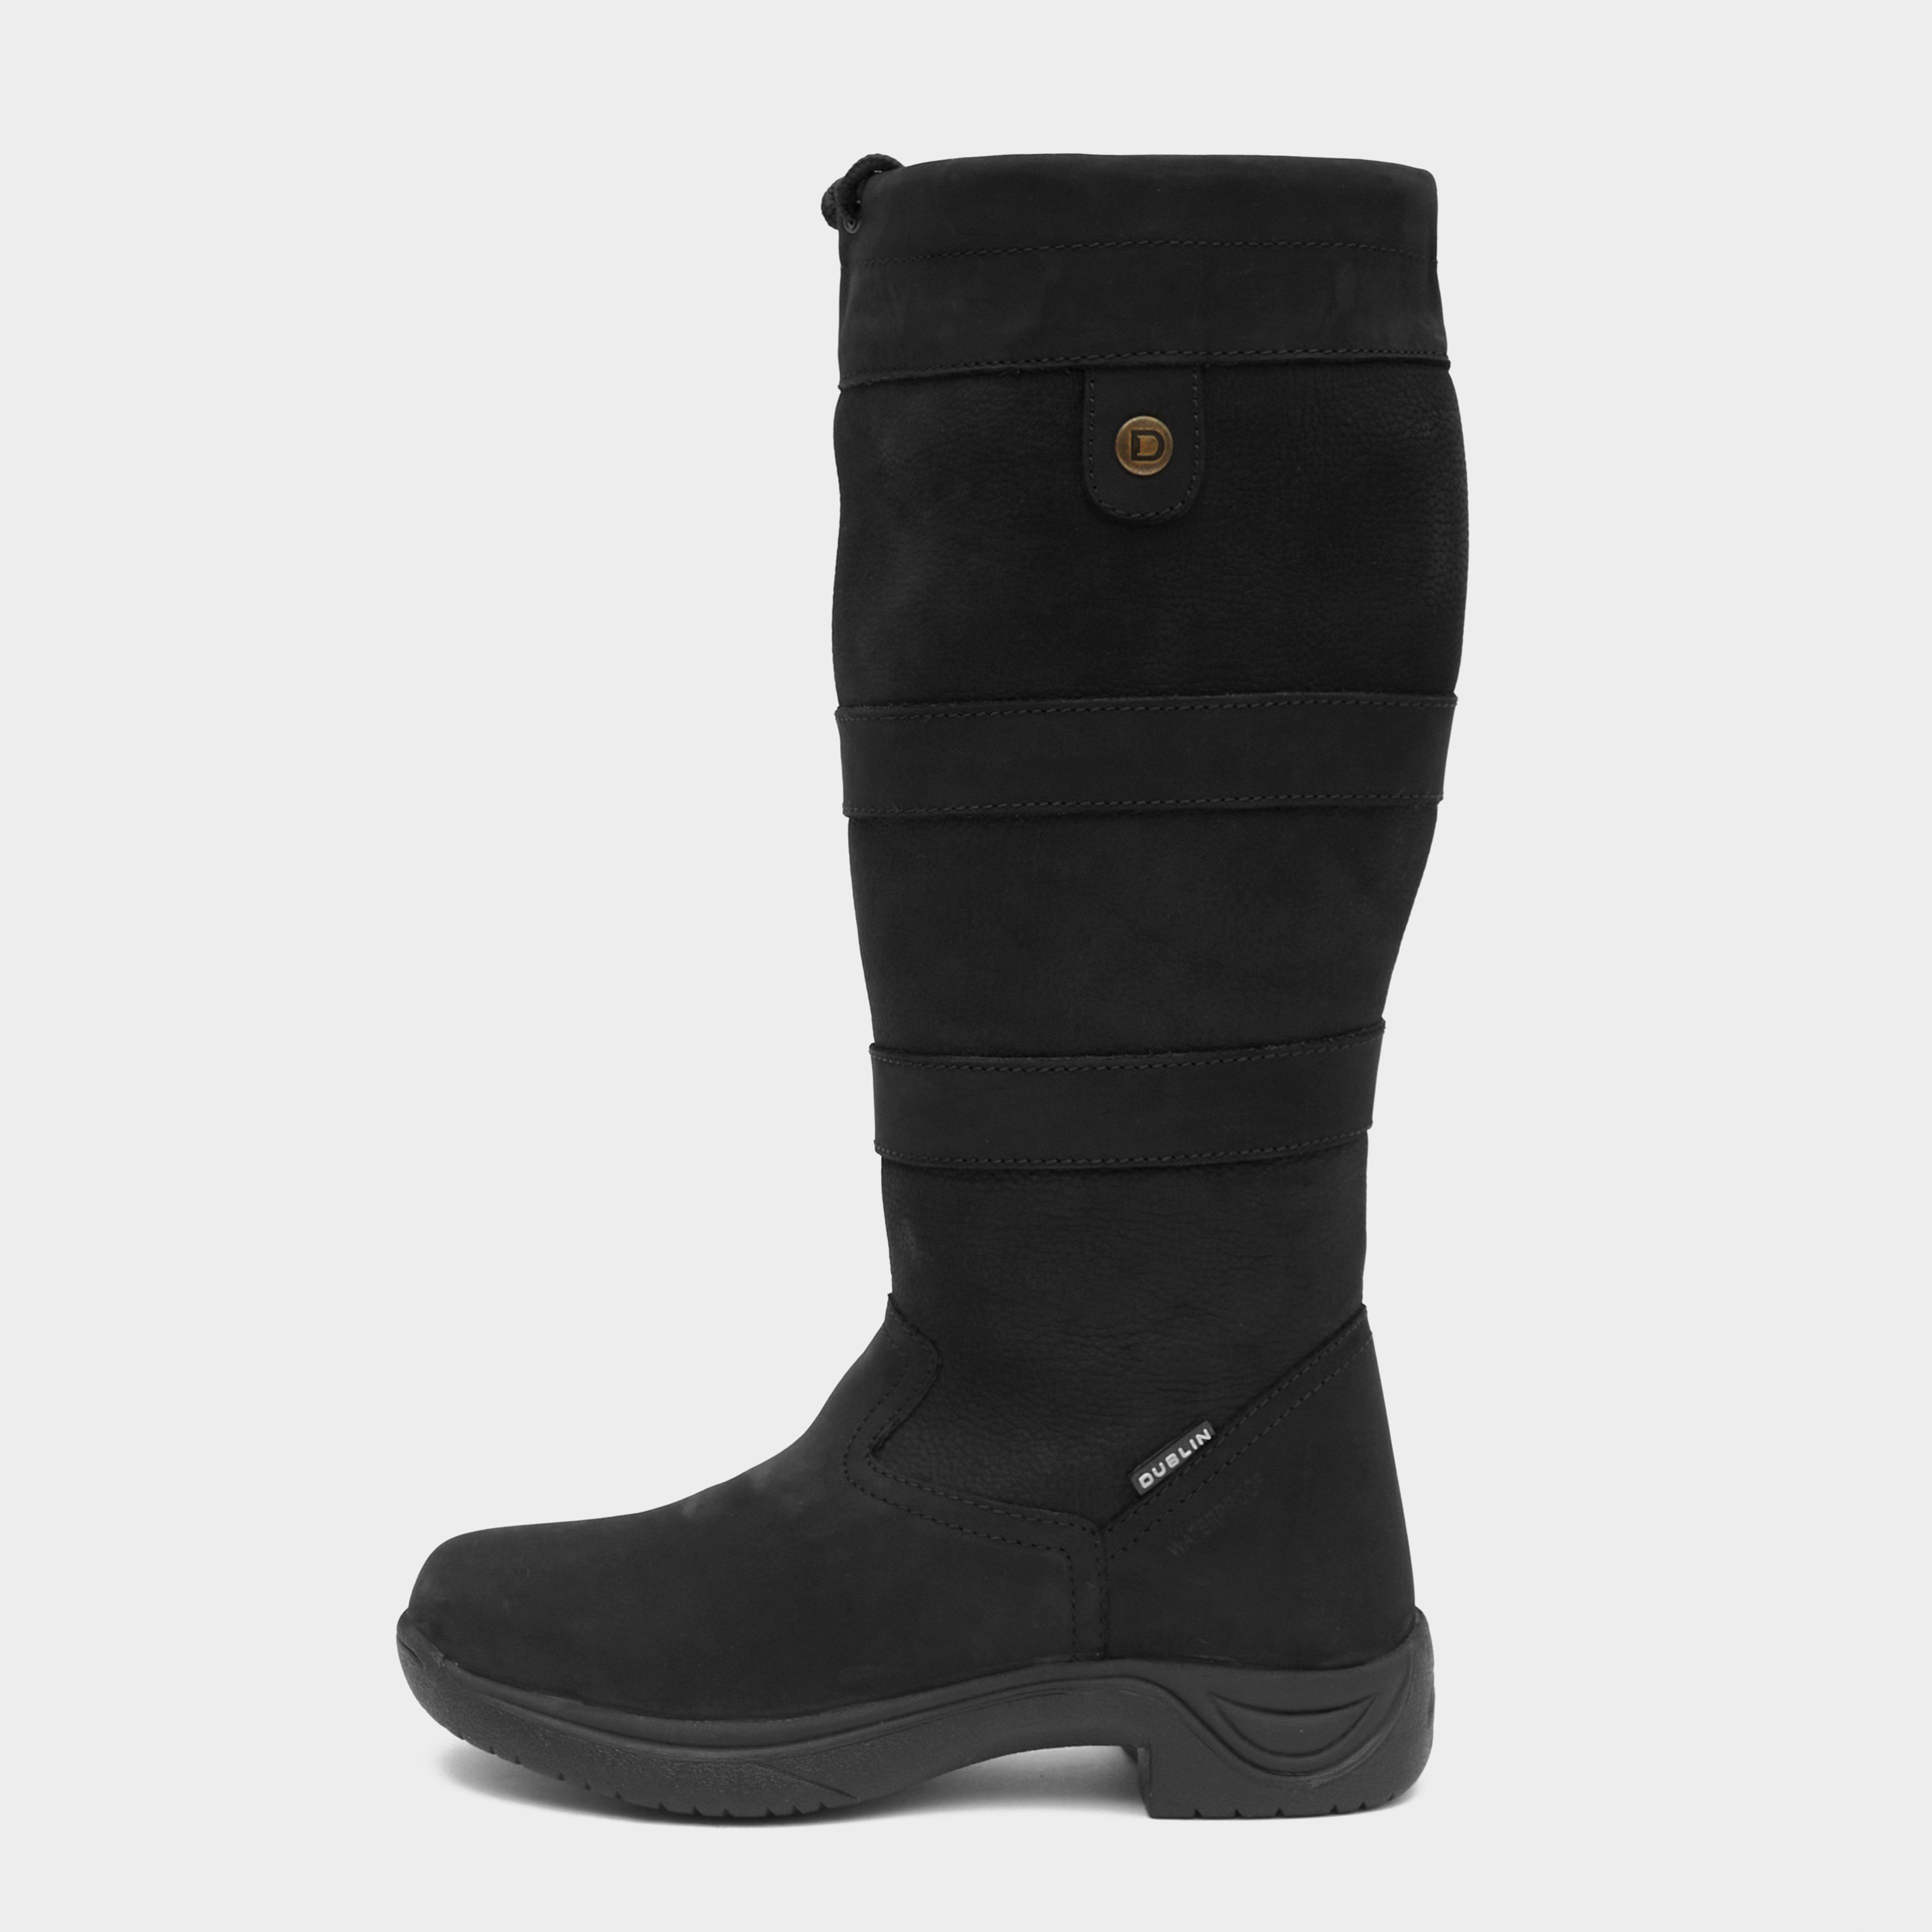  Dublin Ladies River Boots III Black, Black